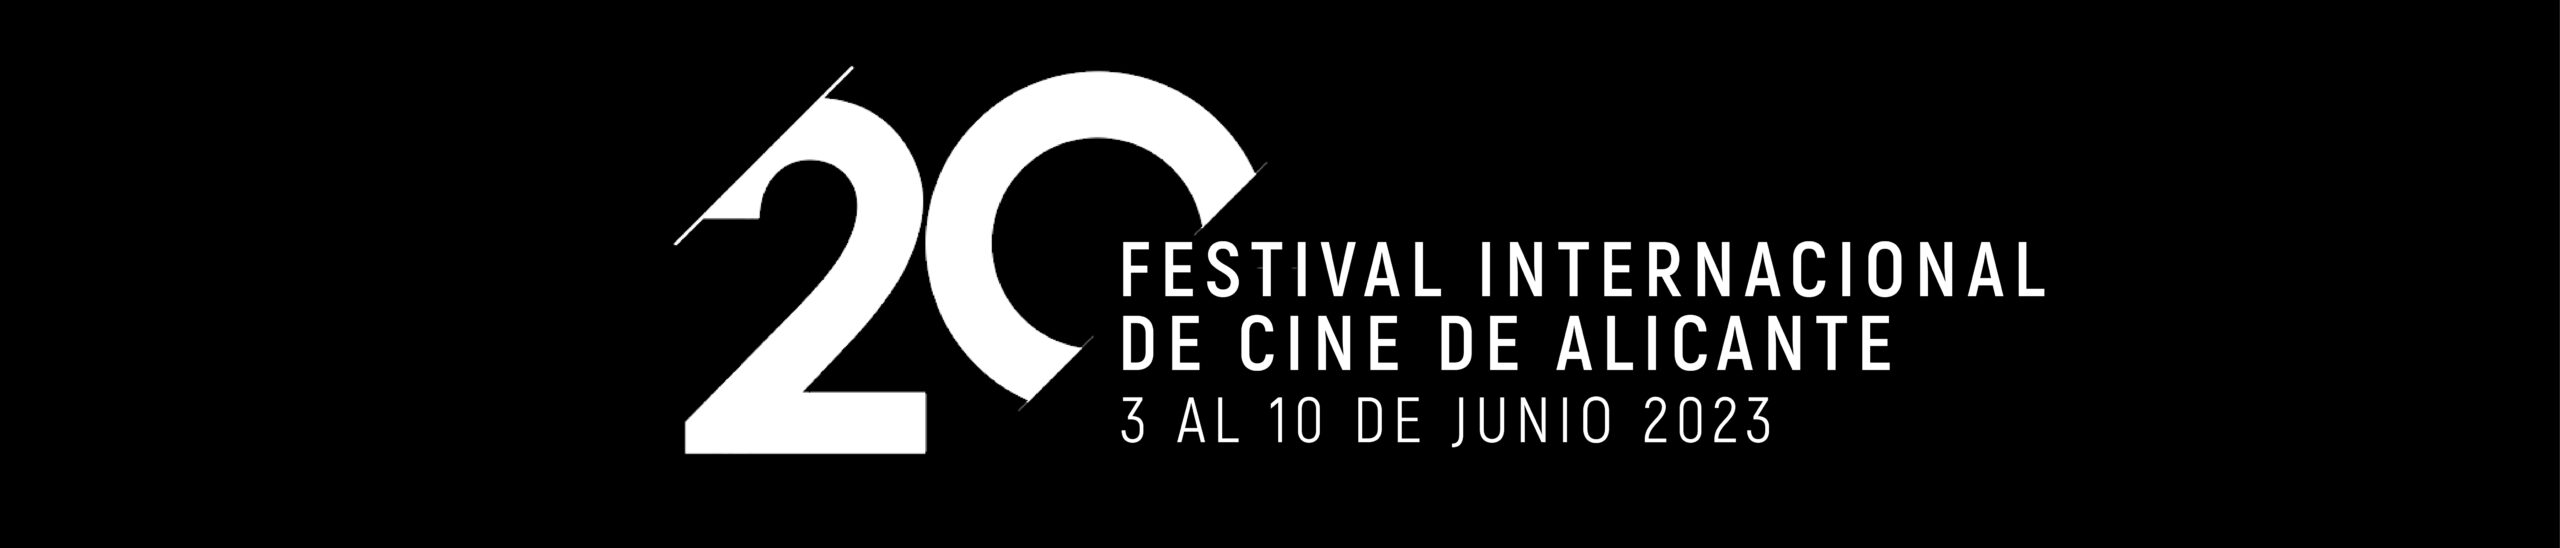 Festival Internacional de Cine de Alicante